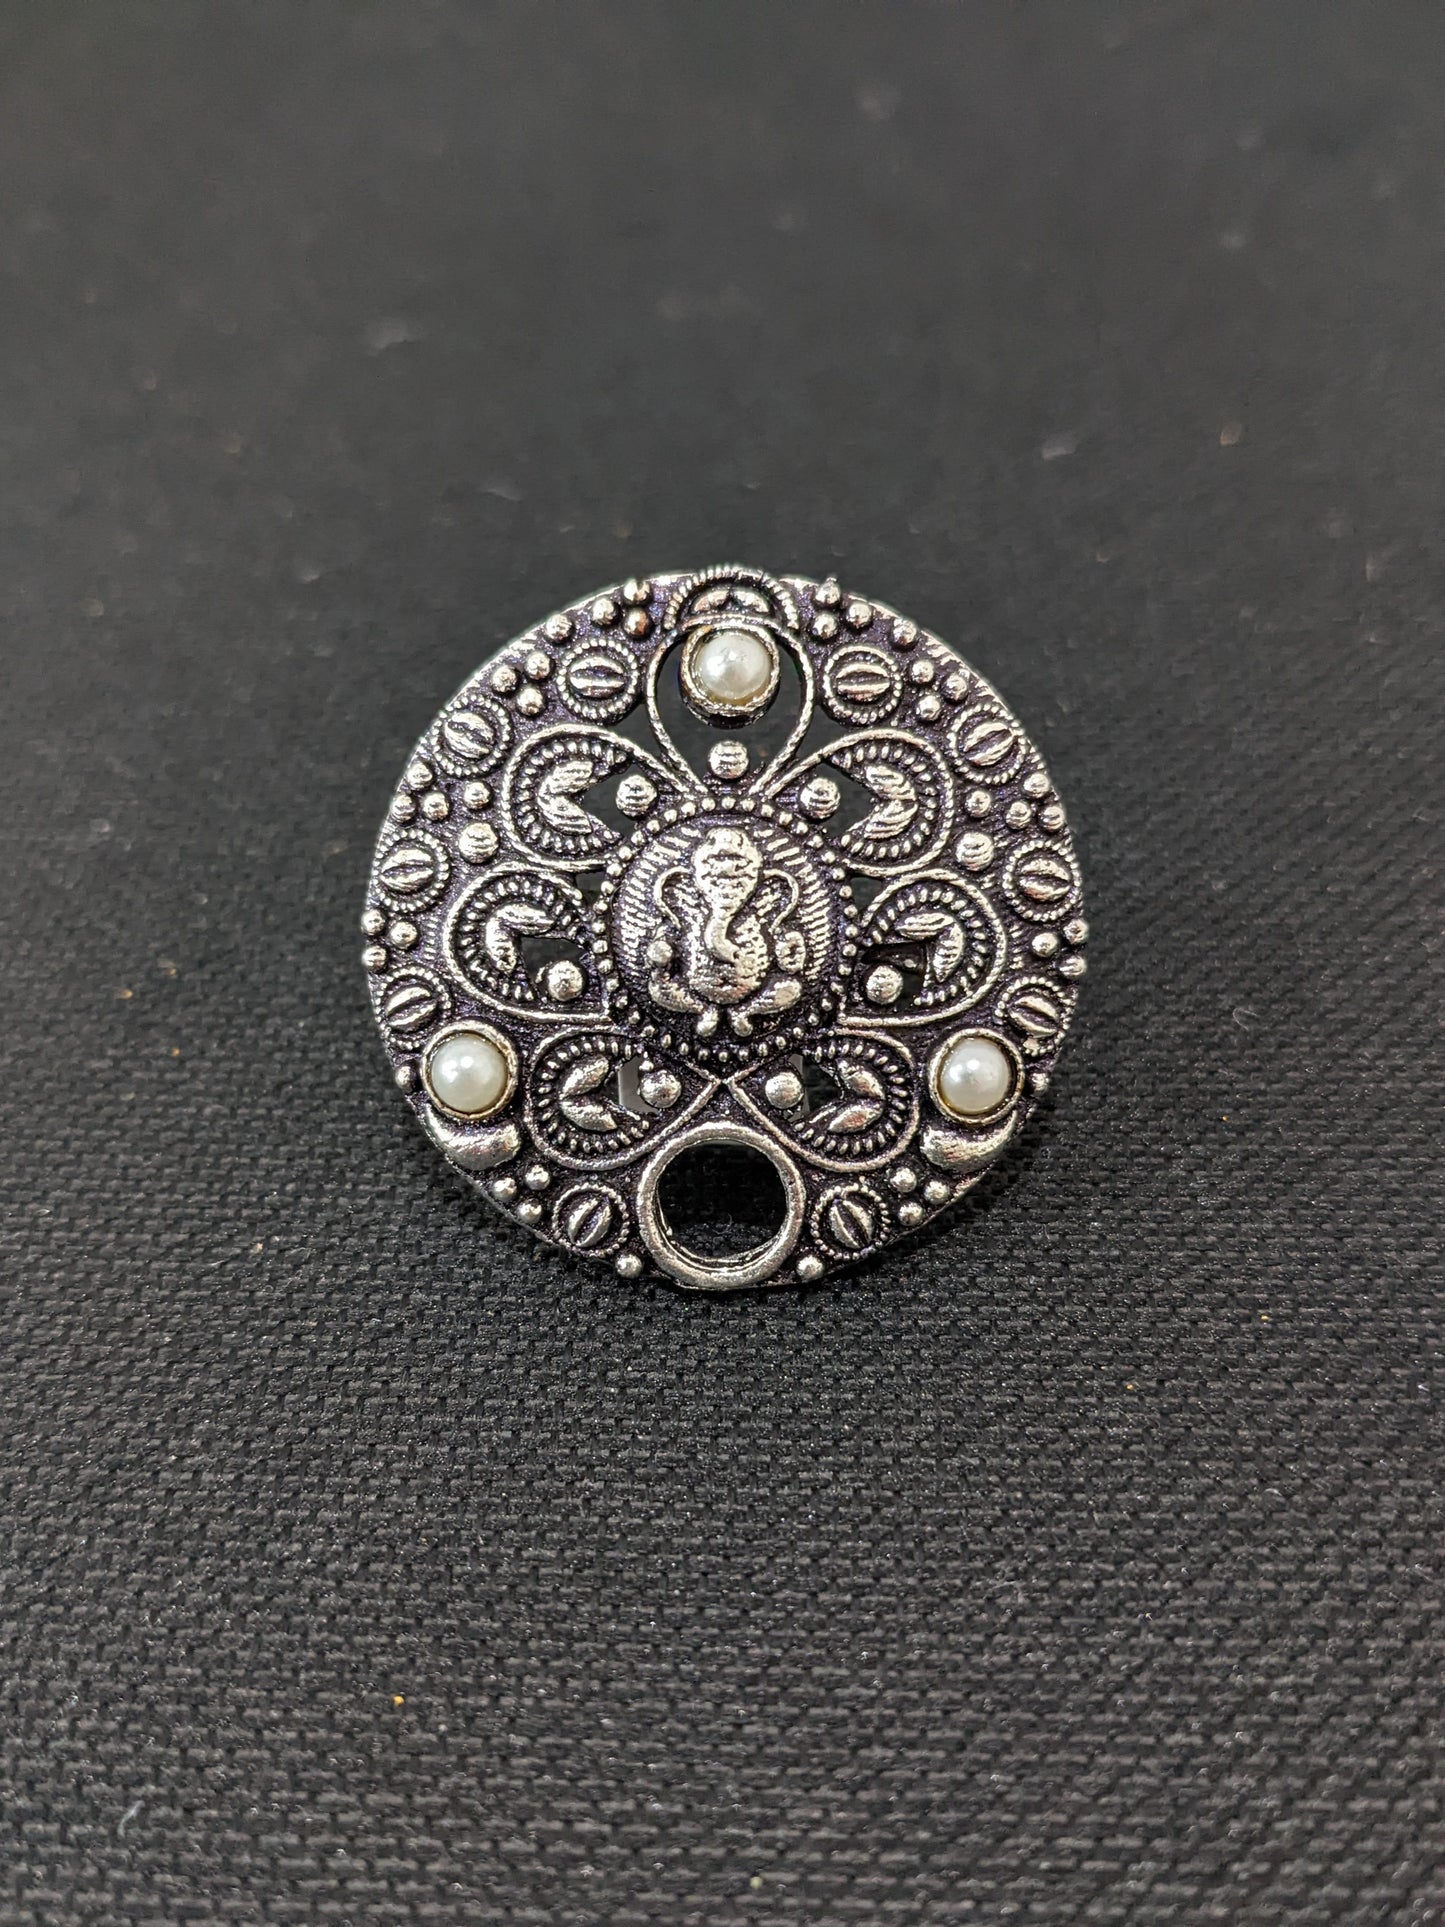 Oxidized Lord Ganesha round Adjustable Finger ring - Simpliful